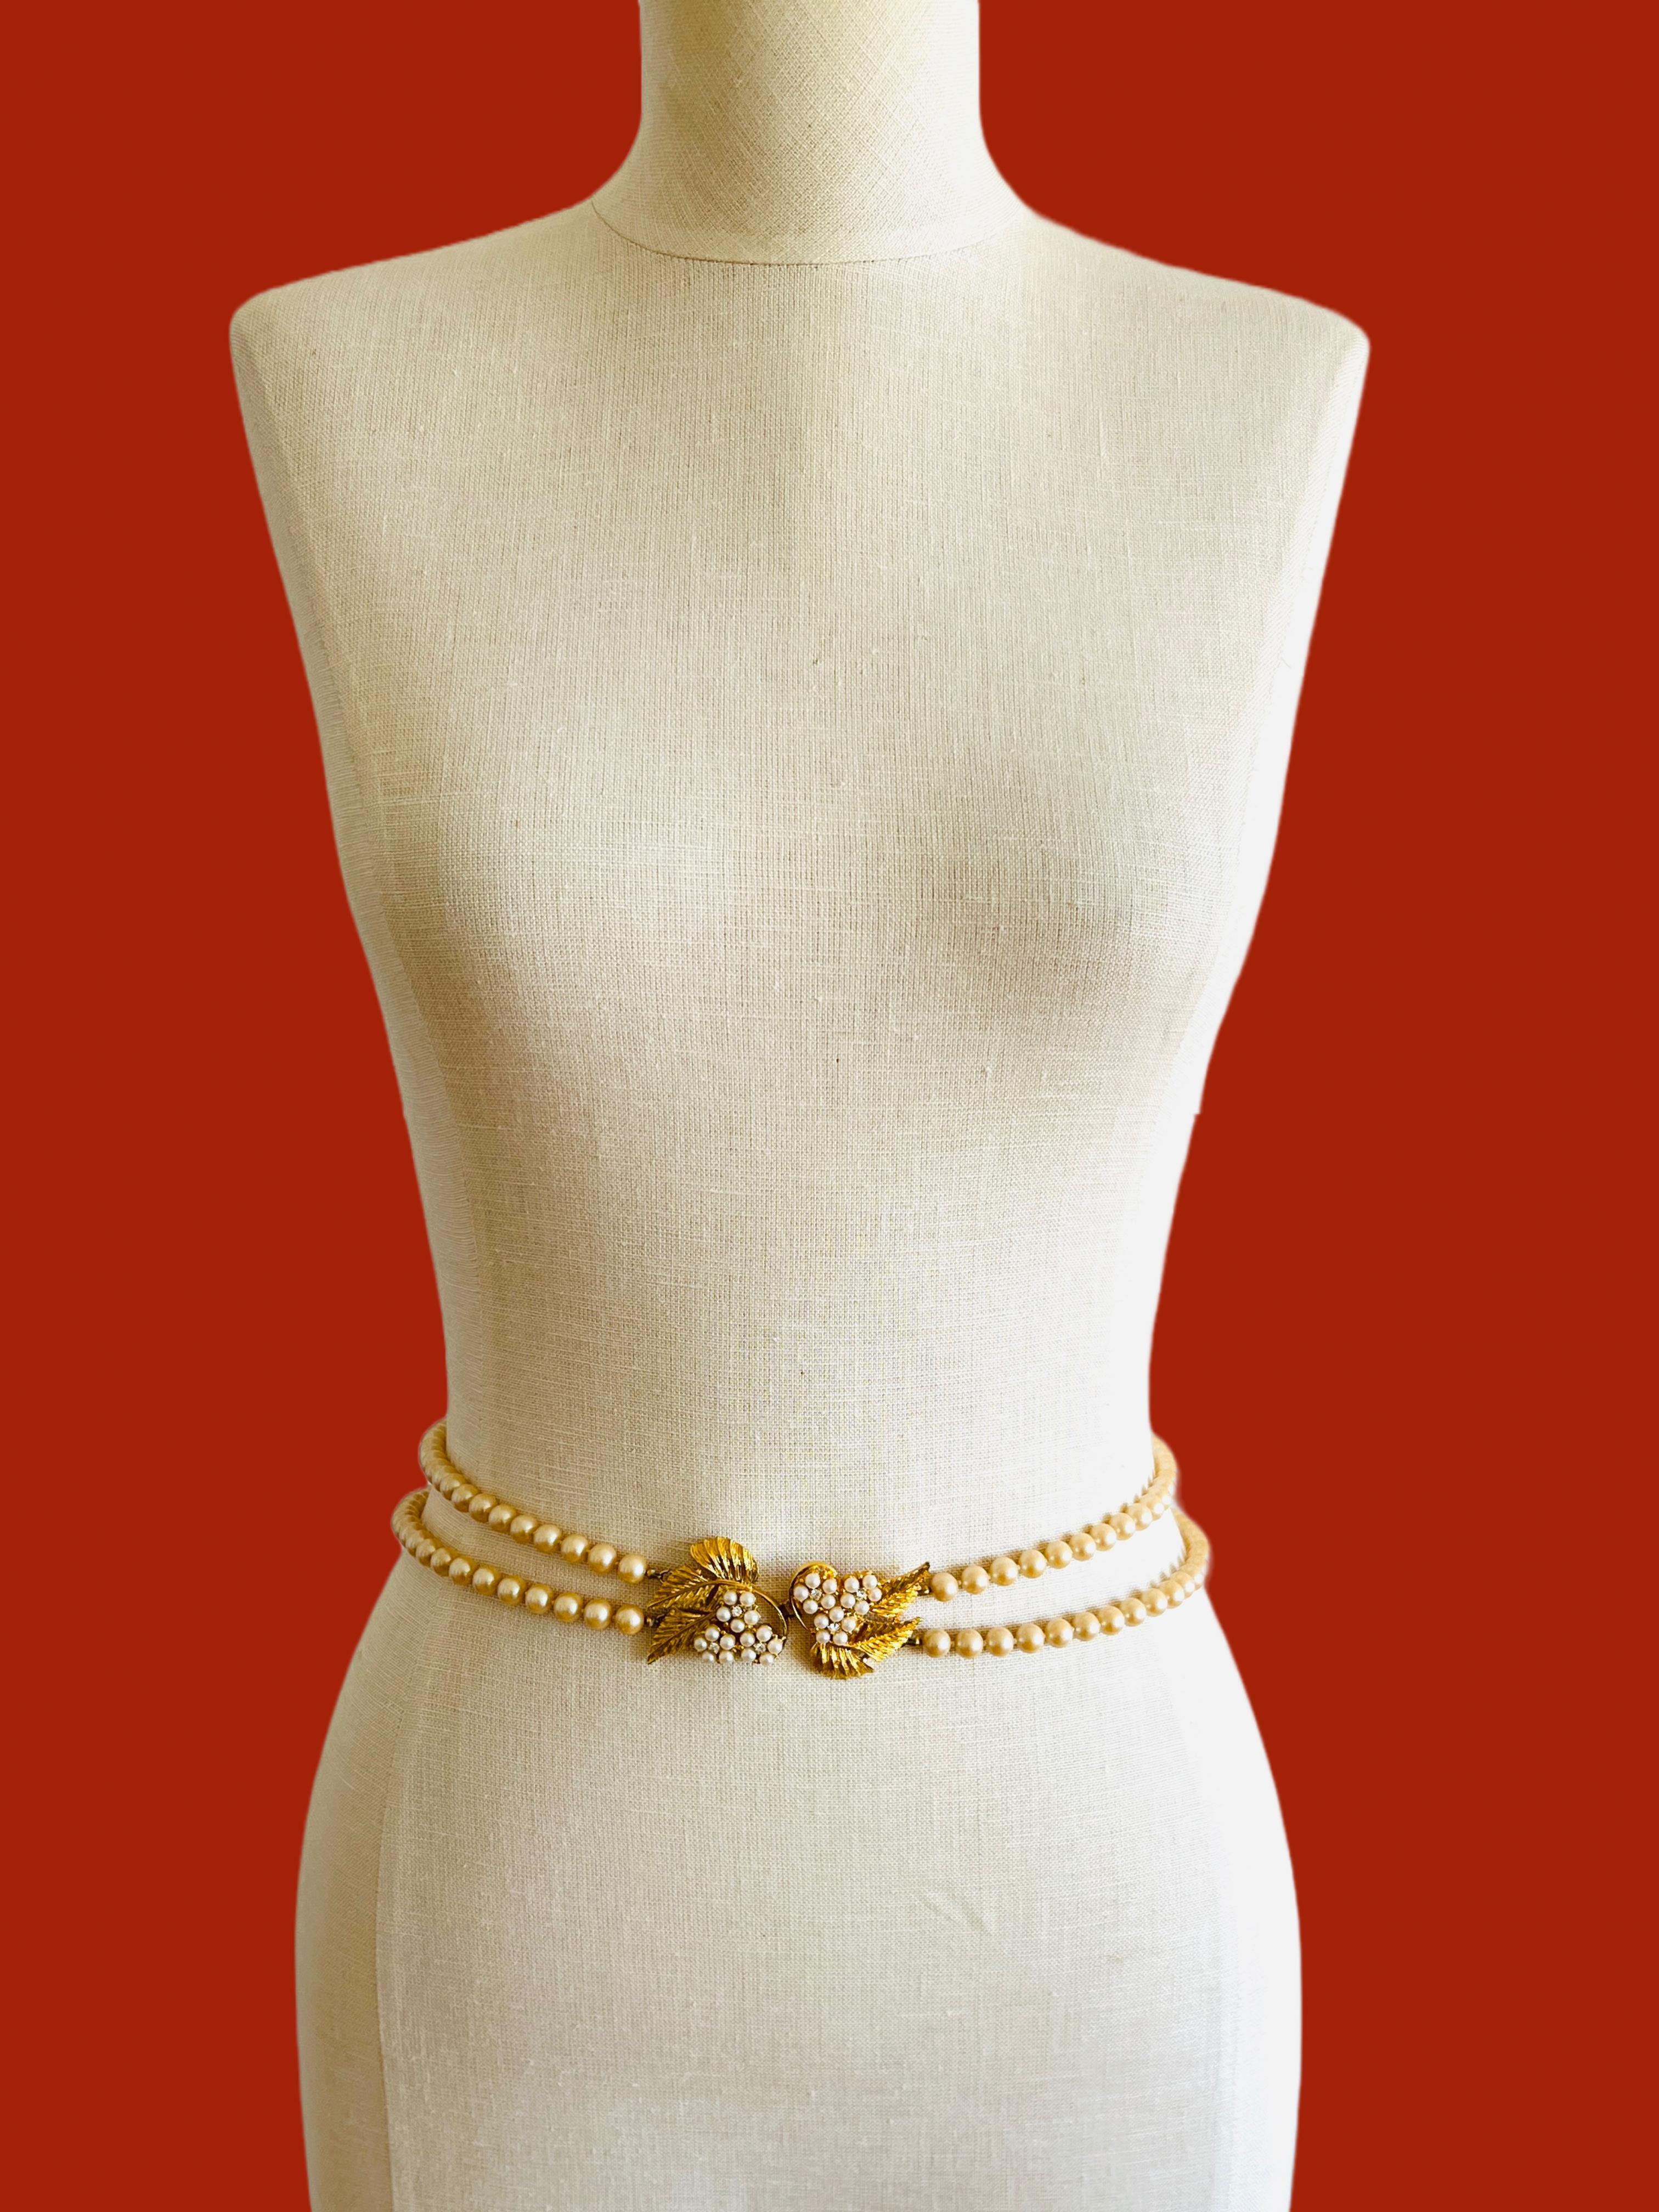 Imitation Pearl Double Strand Leaf Rhinestone Necklace & Belt by Celebrity NY 1